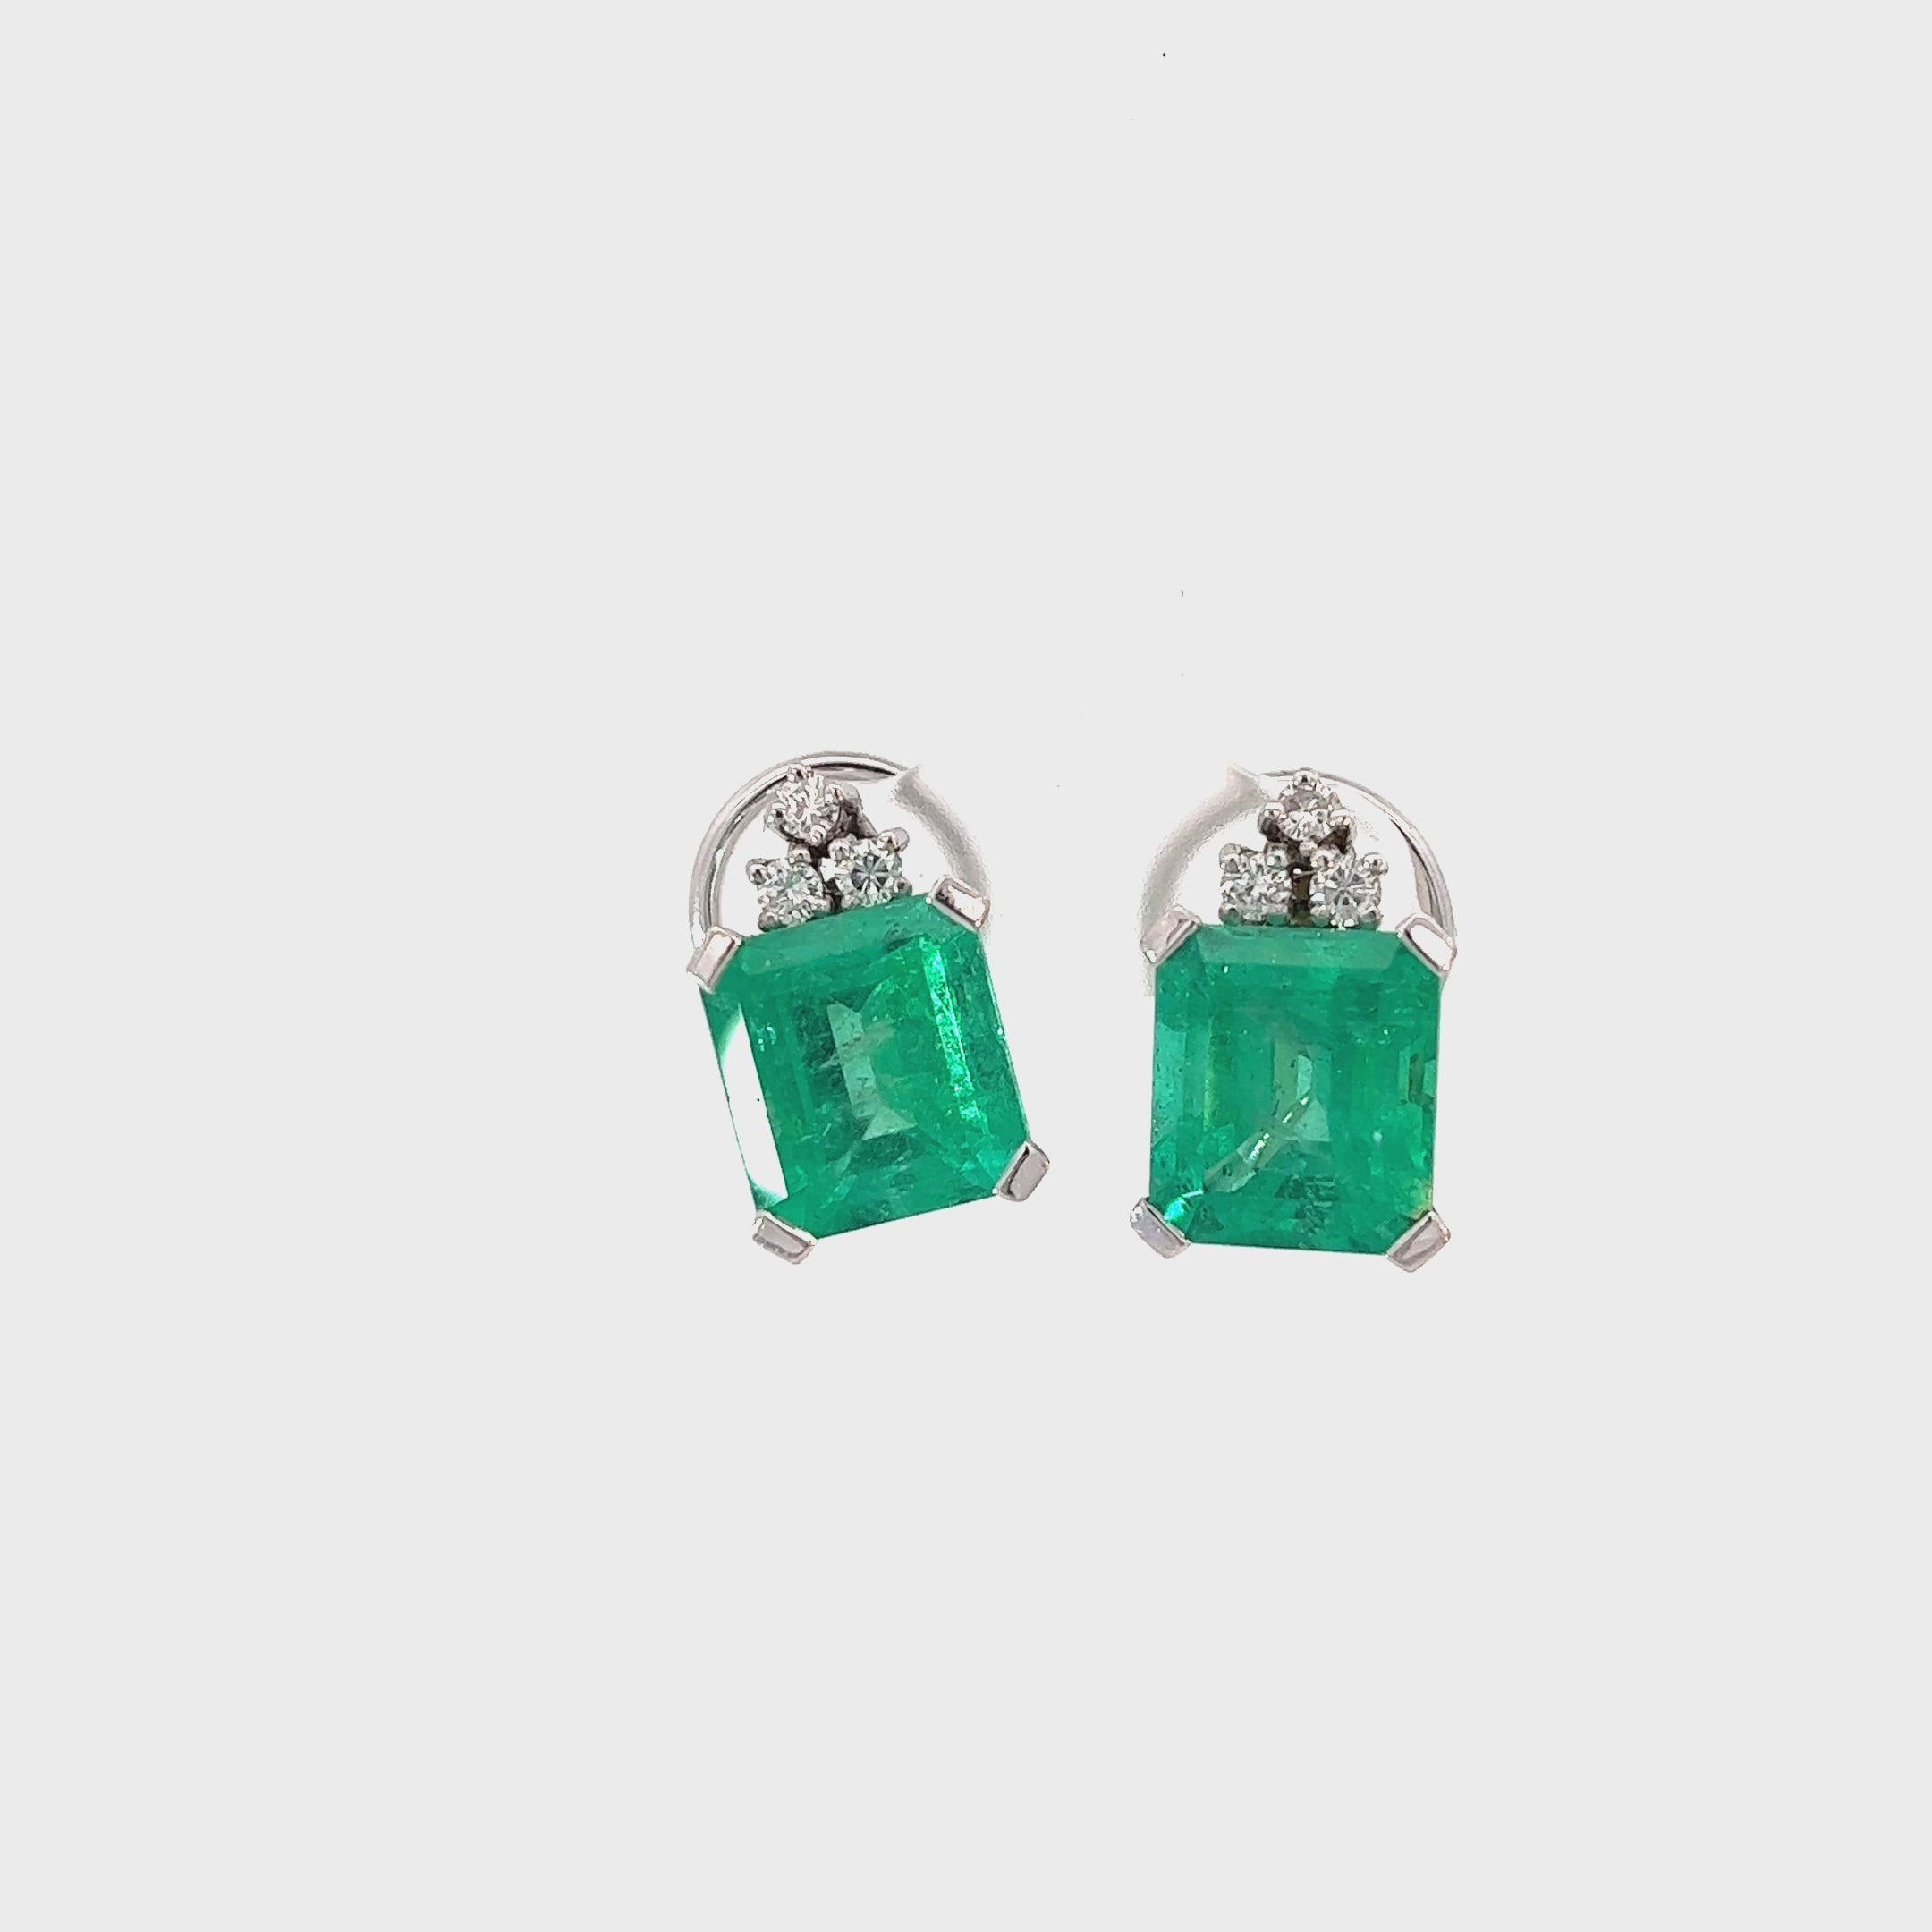 Ladies 18k White Gold Columbian Emerald stud earrings